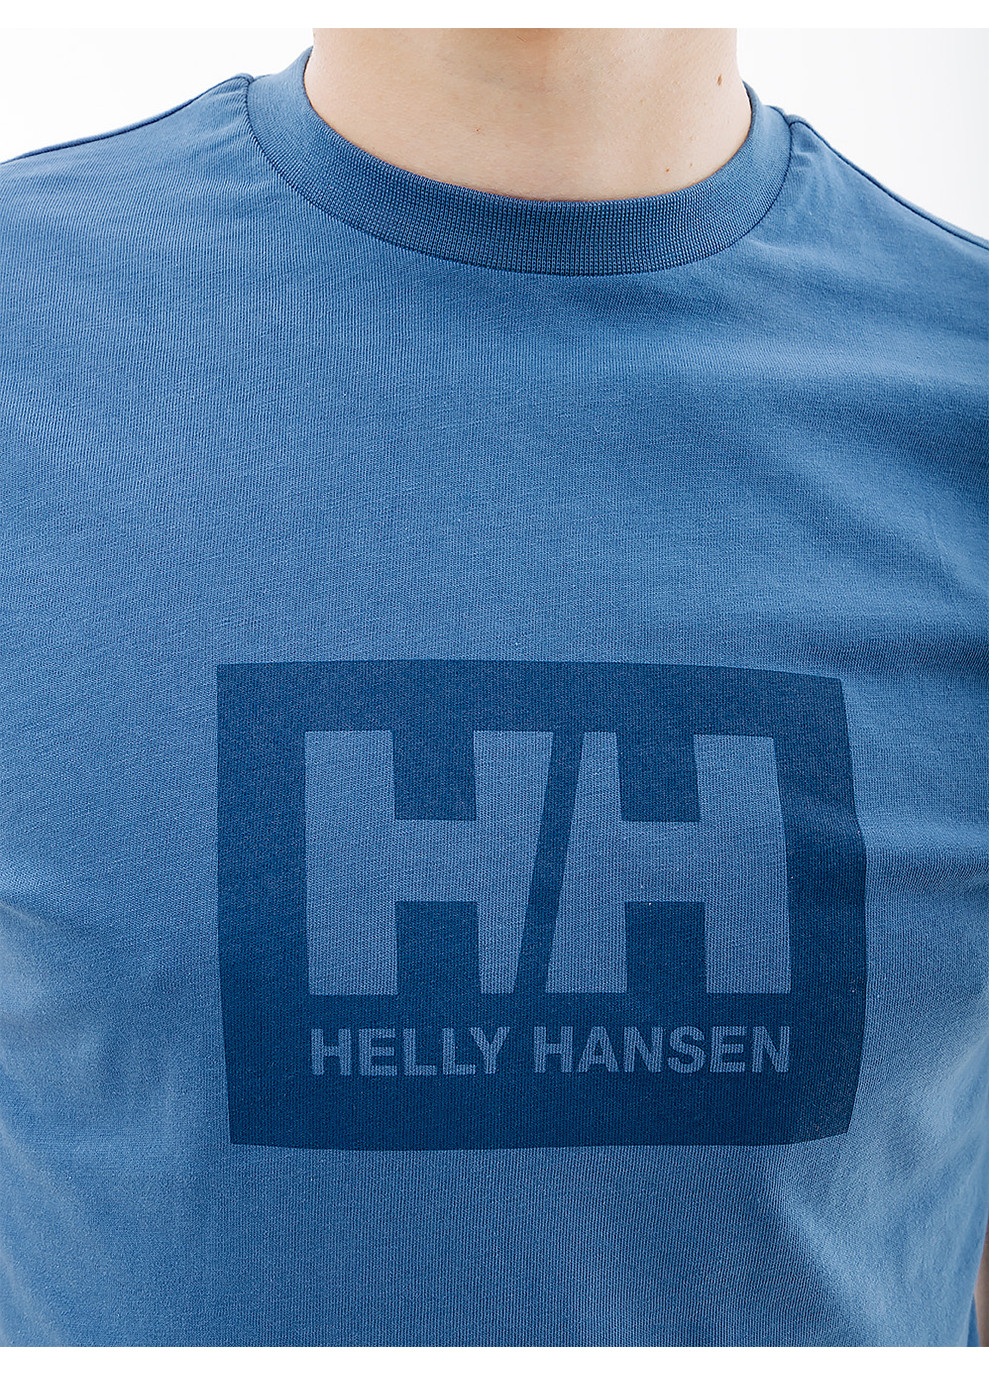 Синяя мужская футболка hh box t синий Helly Hansen